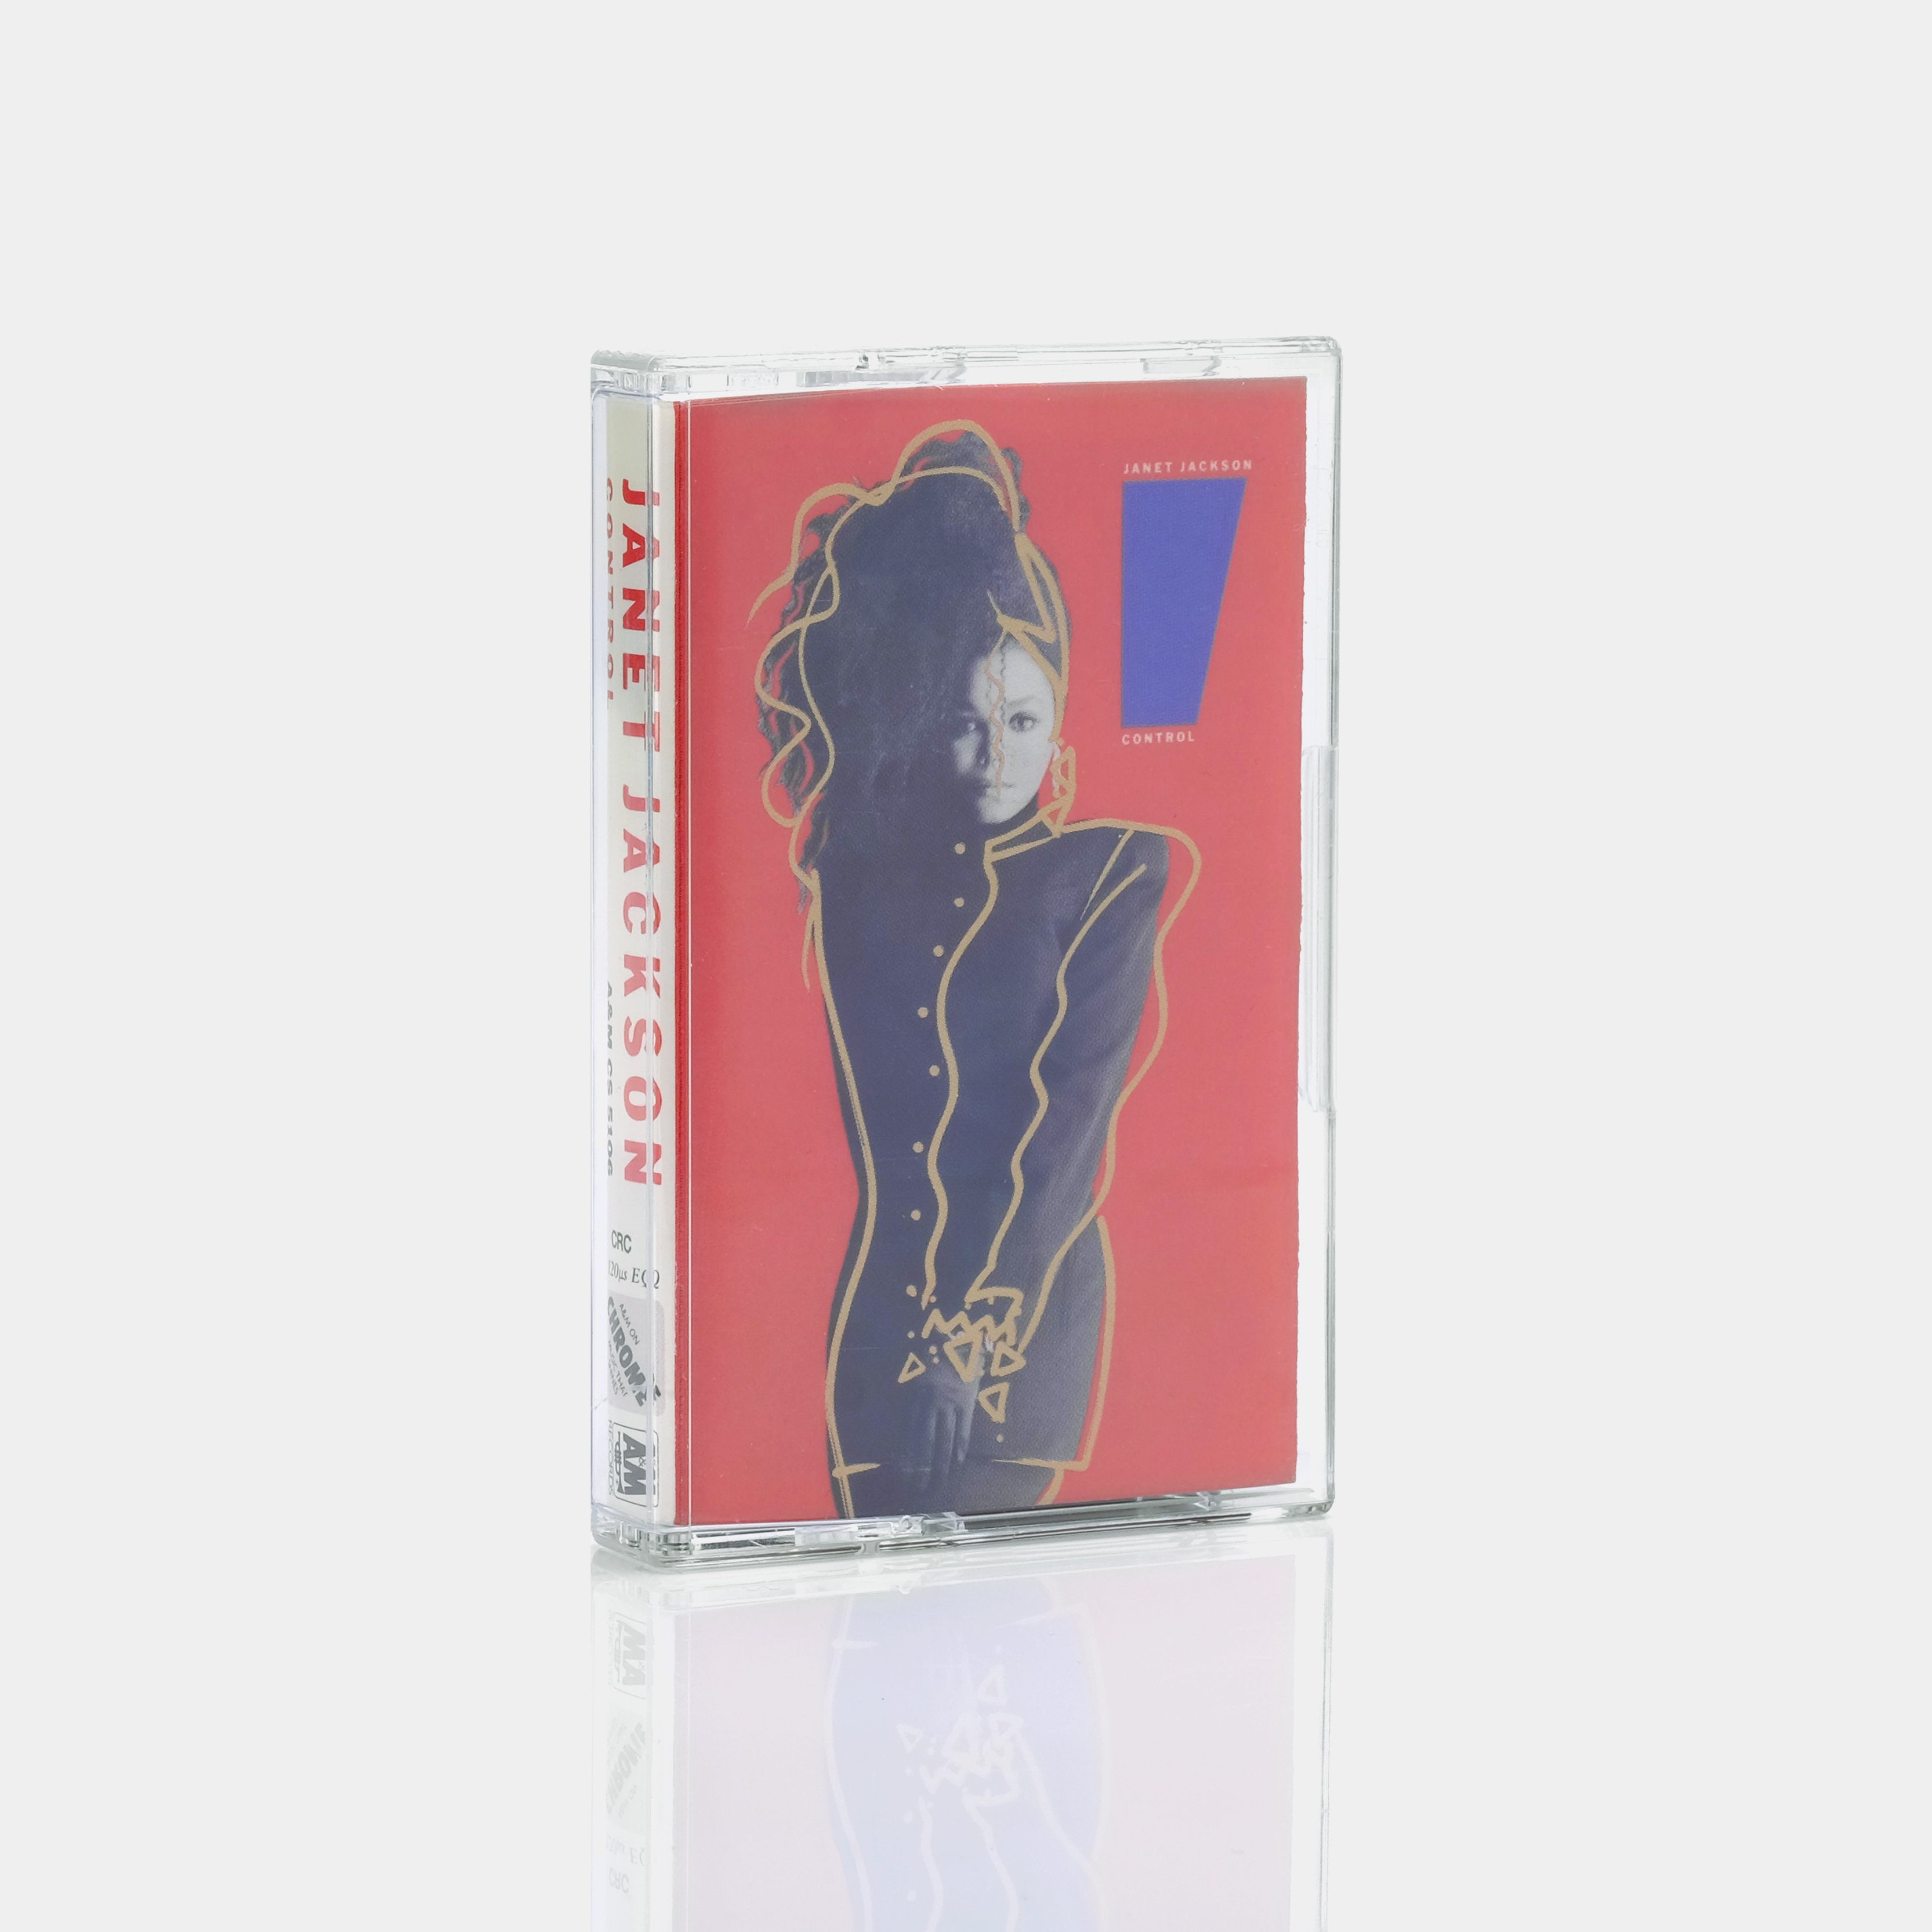 Janet Jackson - Control Cassette Tape